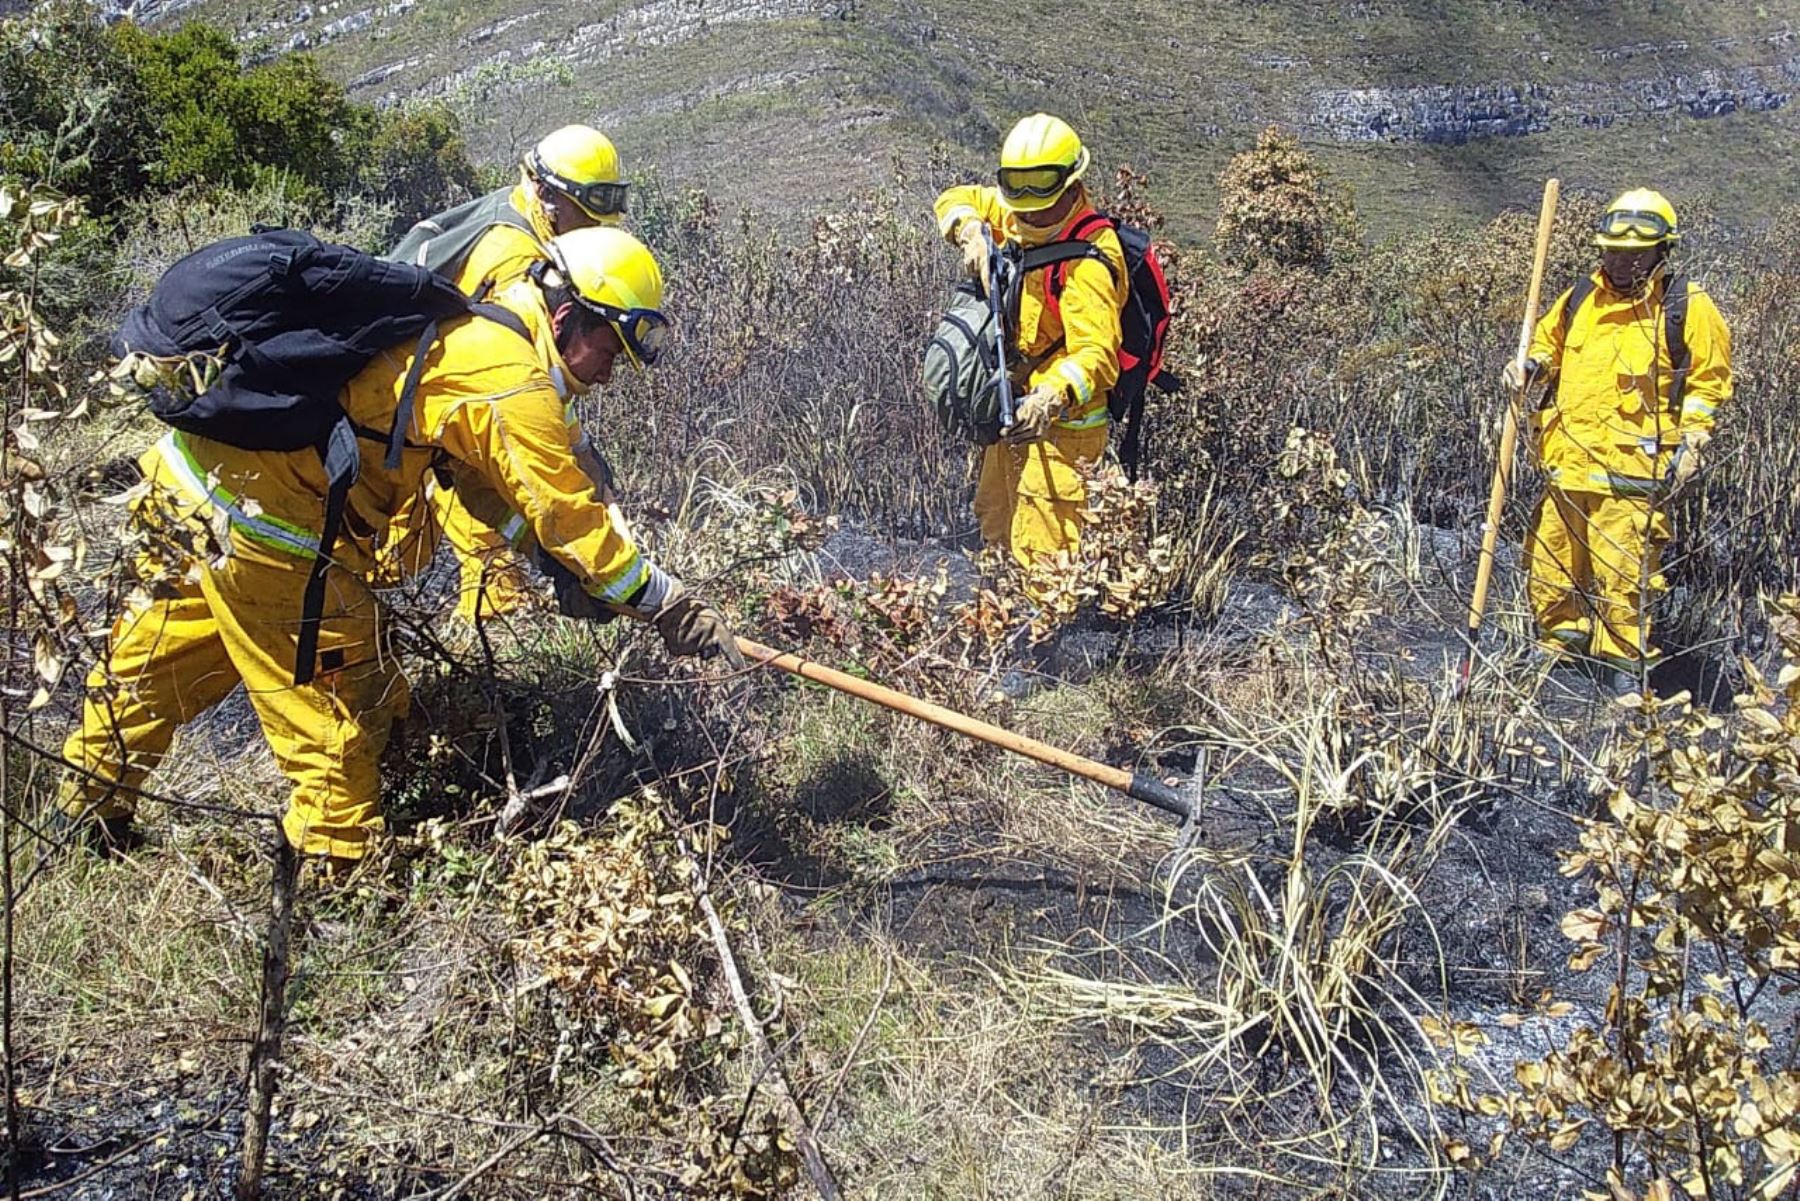 Bomberos del Sernanp y miembros del Ejército controlan incendio forestal en zona cercana a volcán Chachani, en Arequipa. ANDINA/Difusión